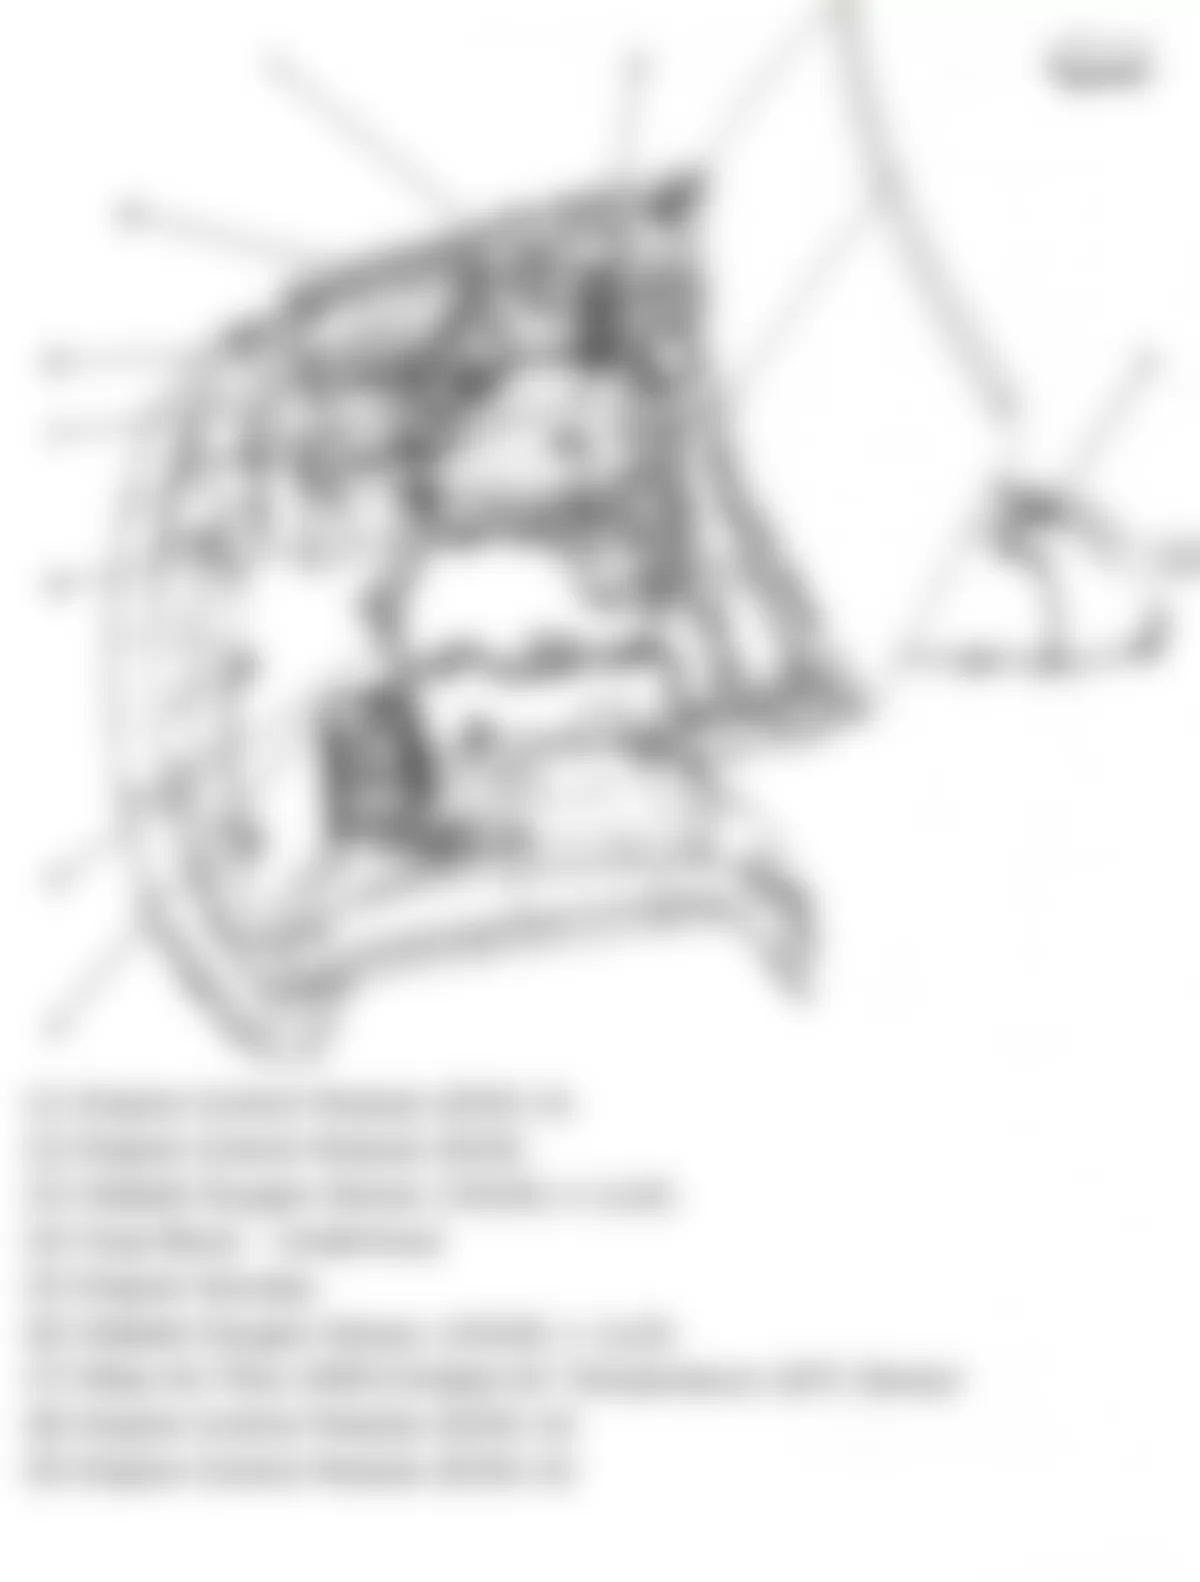 Hummer H3T Alpha 2009 - Component Locations -  Engine Compartment Components - Top